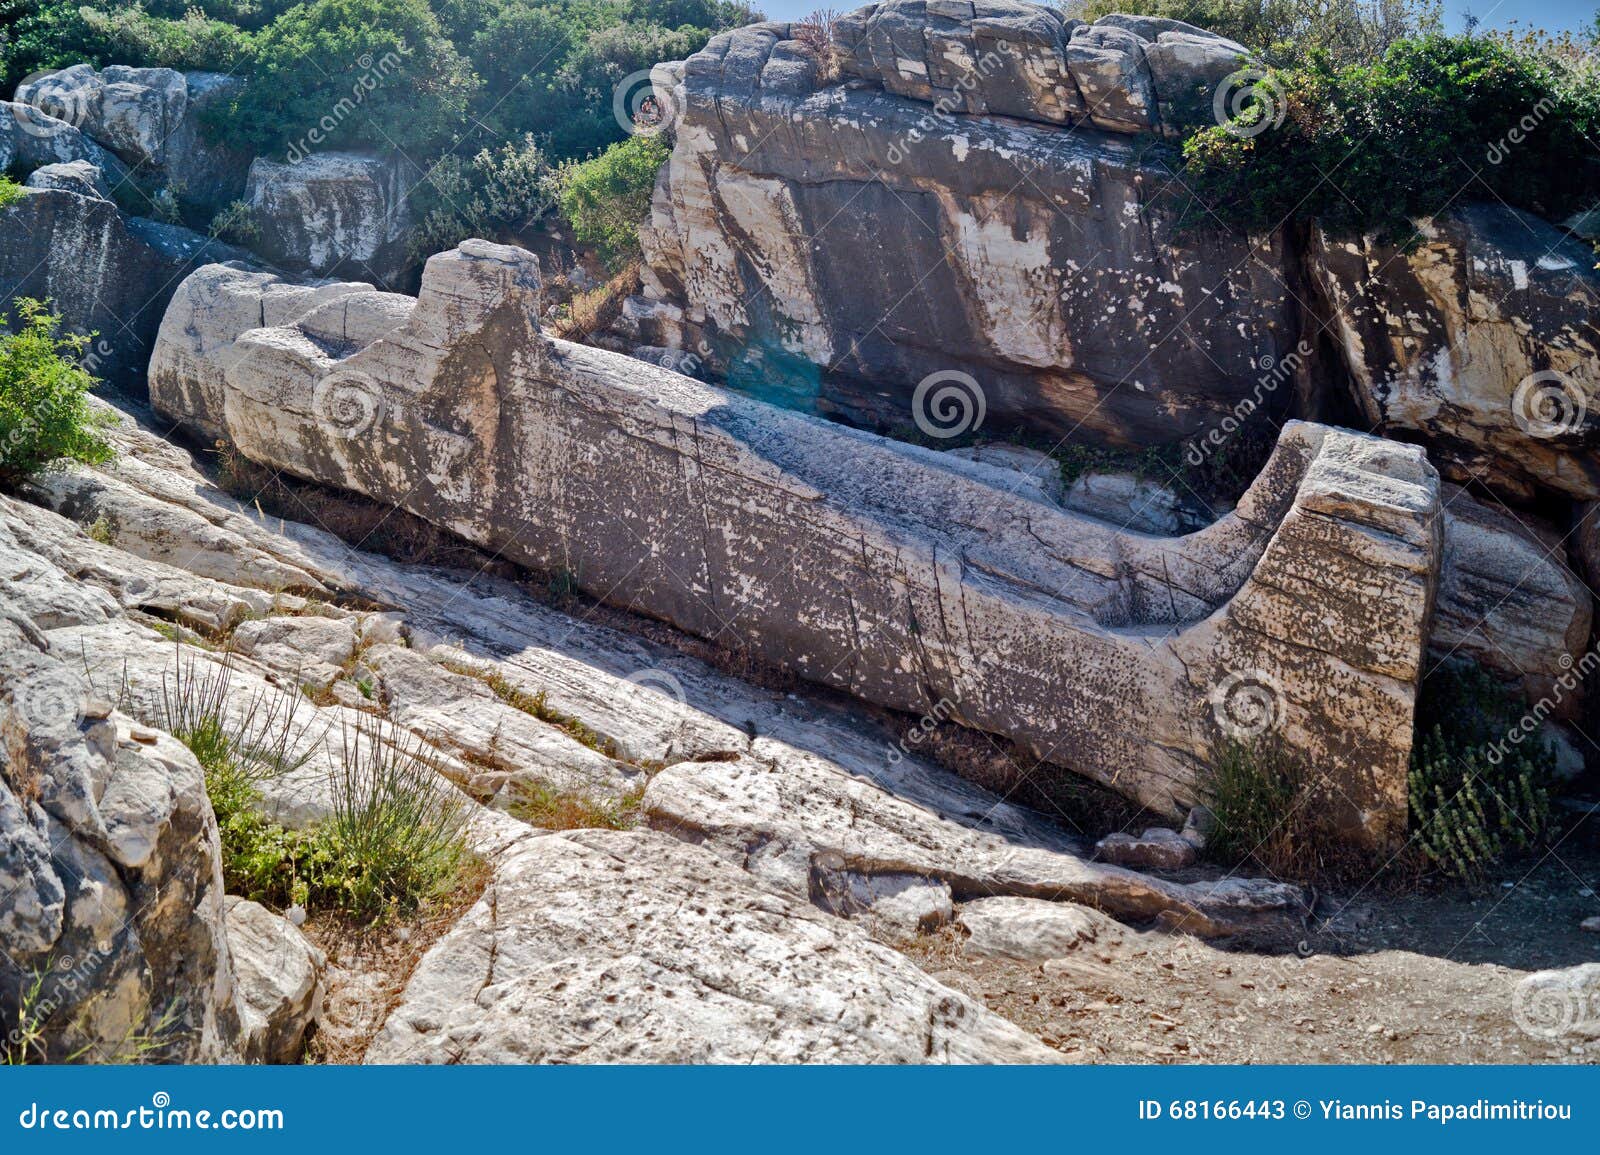 naxos melanes kouros statue, greece ( 6 m. long, 7th century